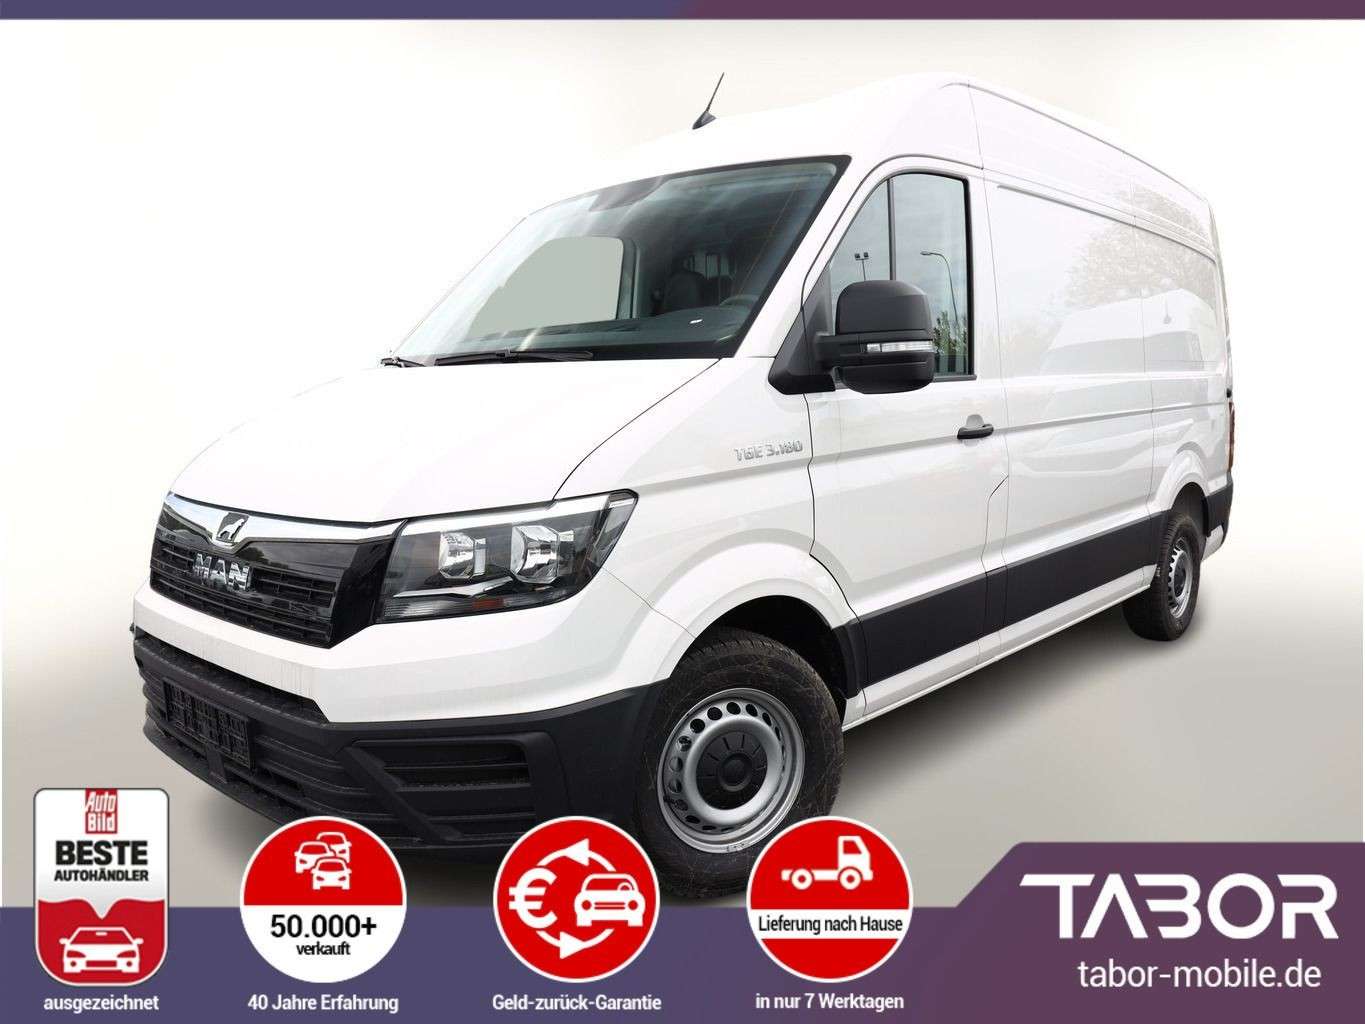 MAN TGE Van in White used in Achern for € 44,288.-